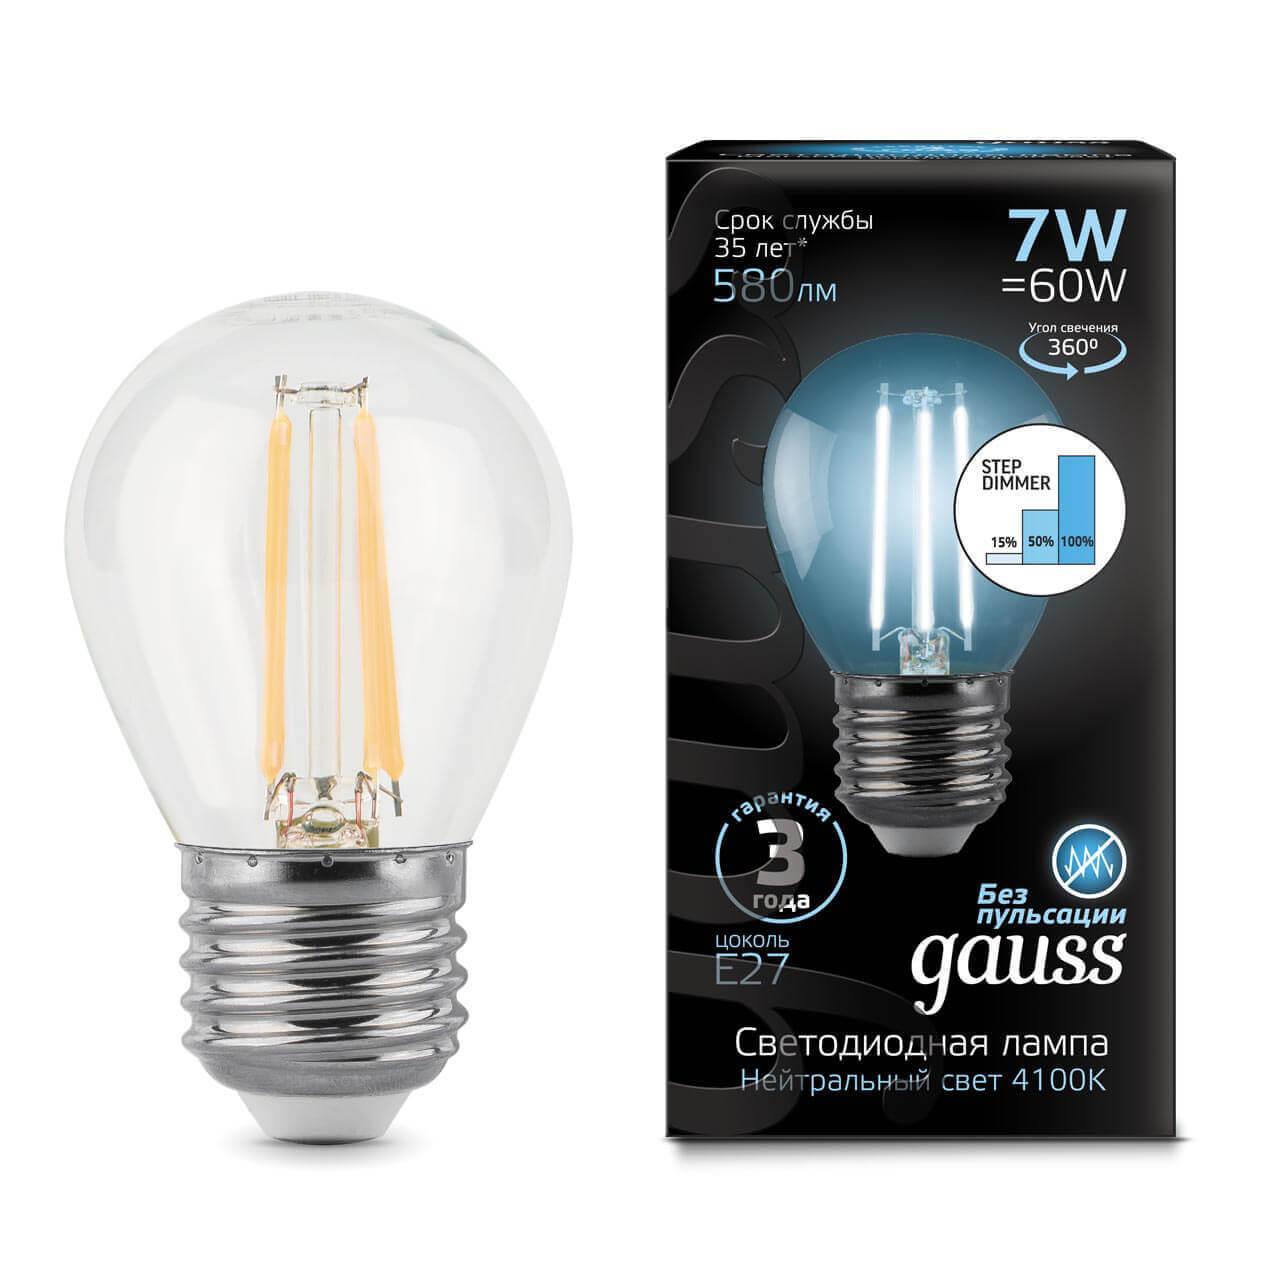 Gauss Лампа Filament Шар 7W 580lm 4100К Е27 шаг. диммирование LED